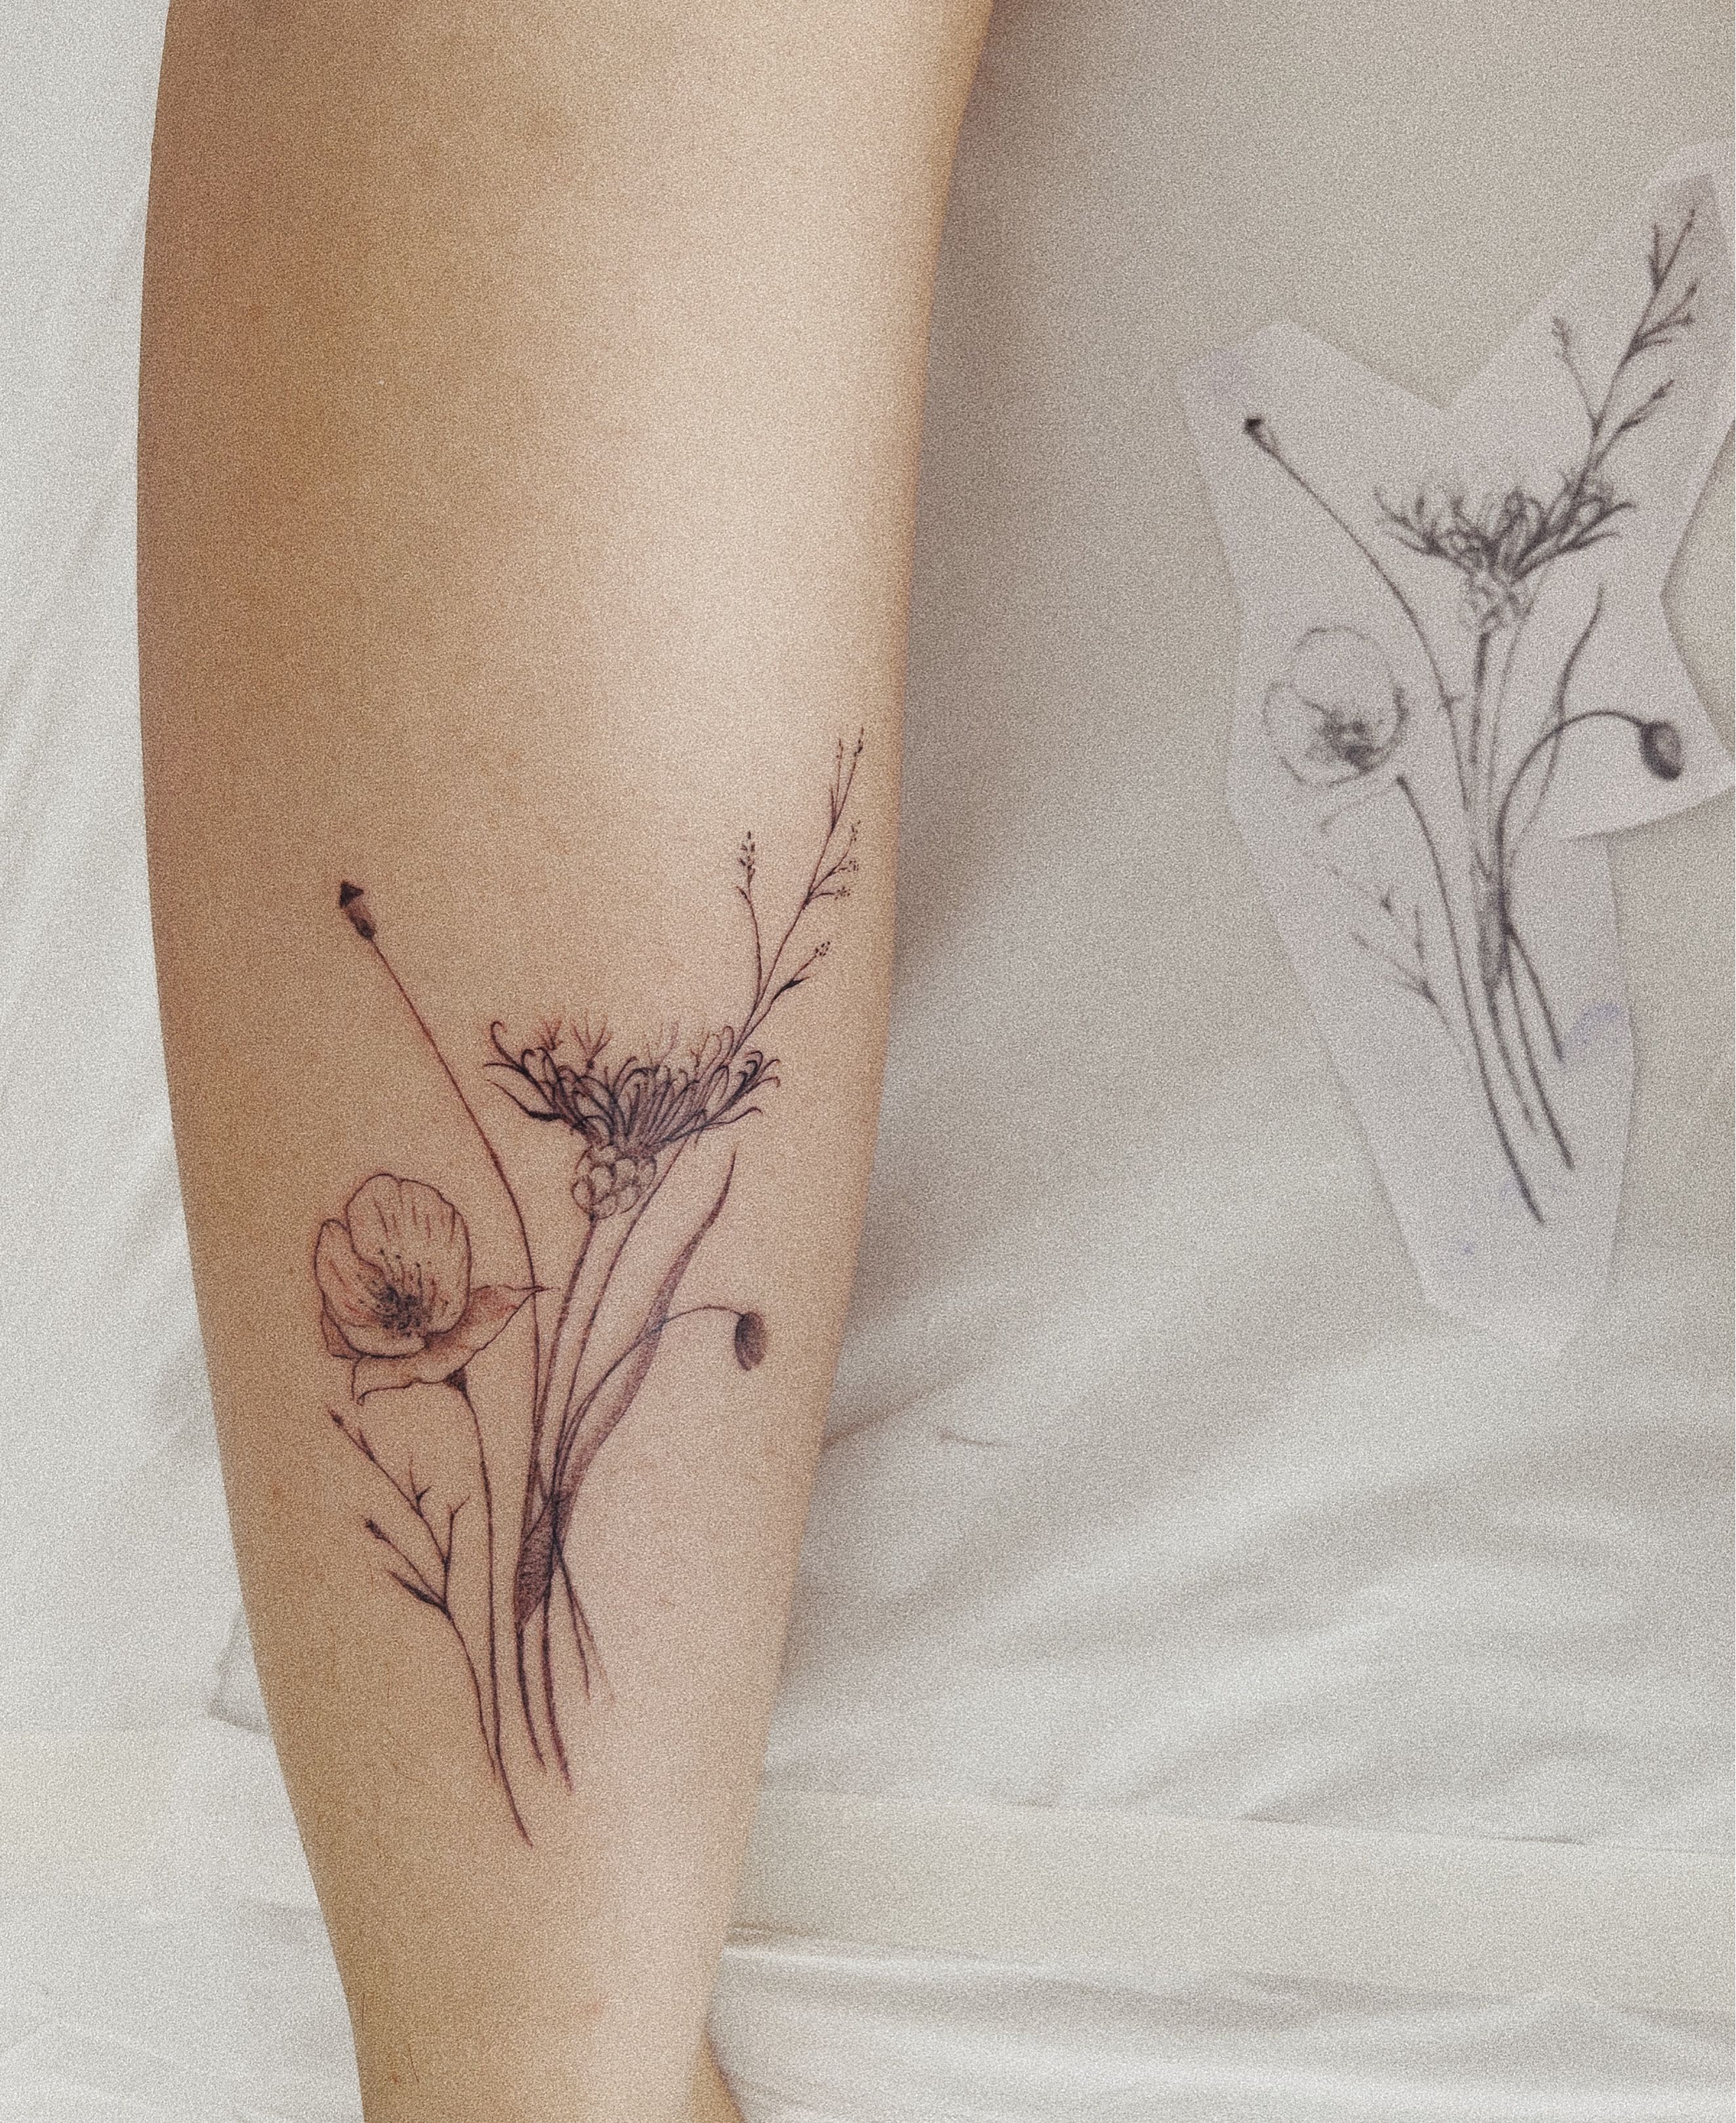 30 October Birth Flower Tattoo Ideas Cosmos  Marigolds  100 Tattoos